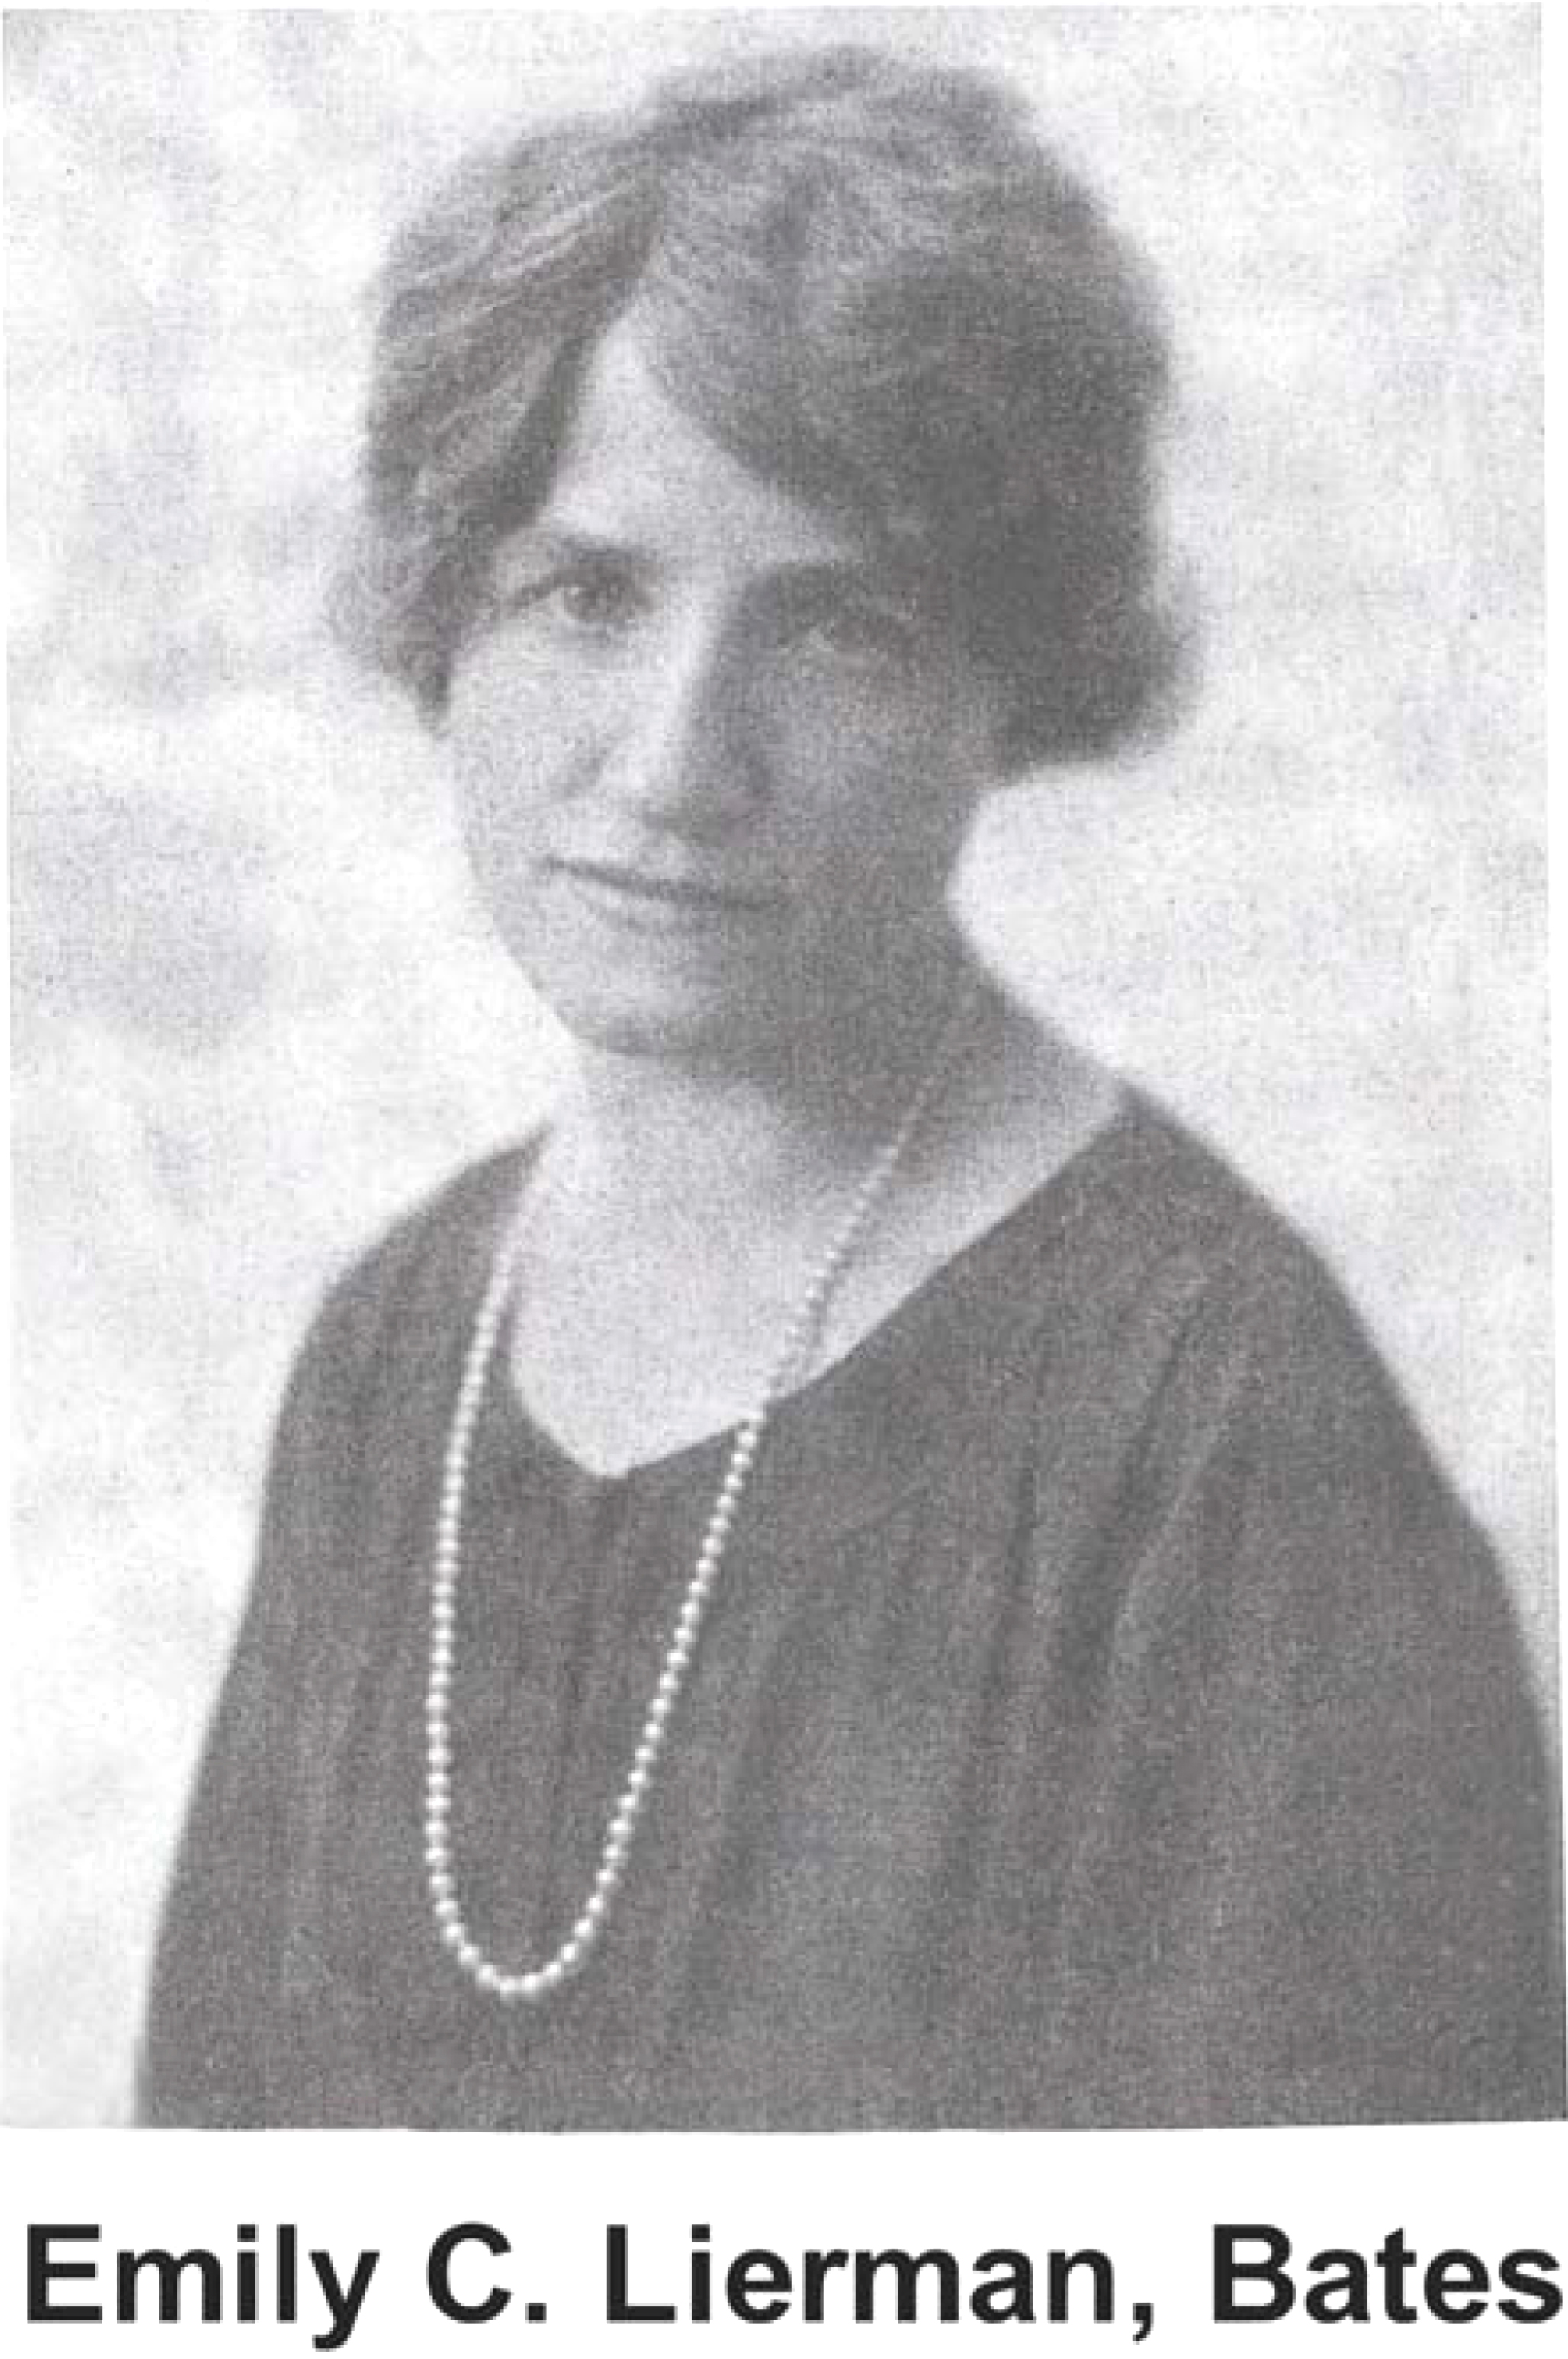 Emily C. Lierman, A. Bates